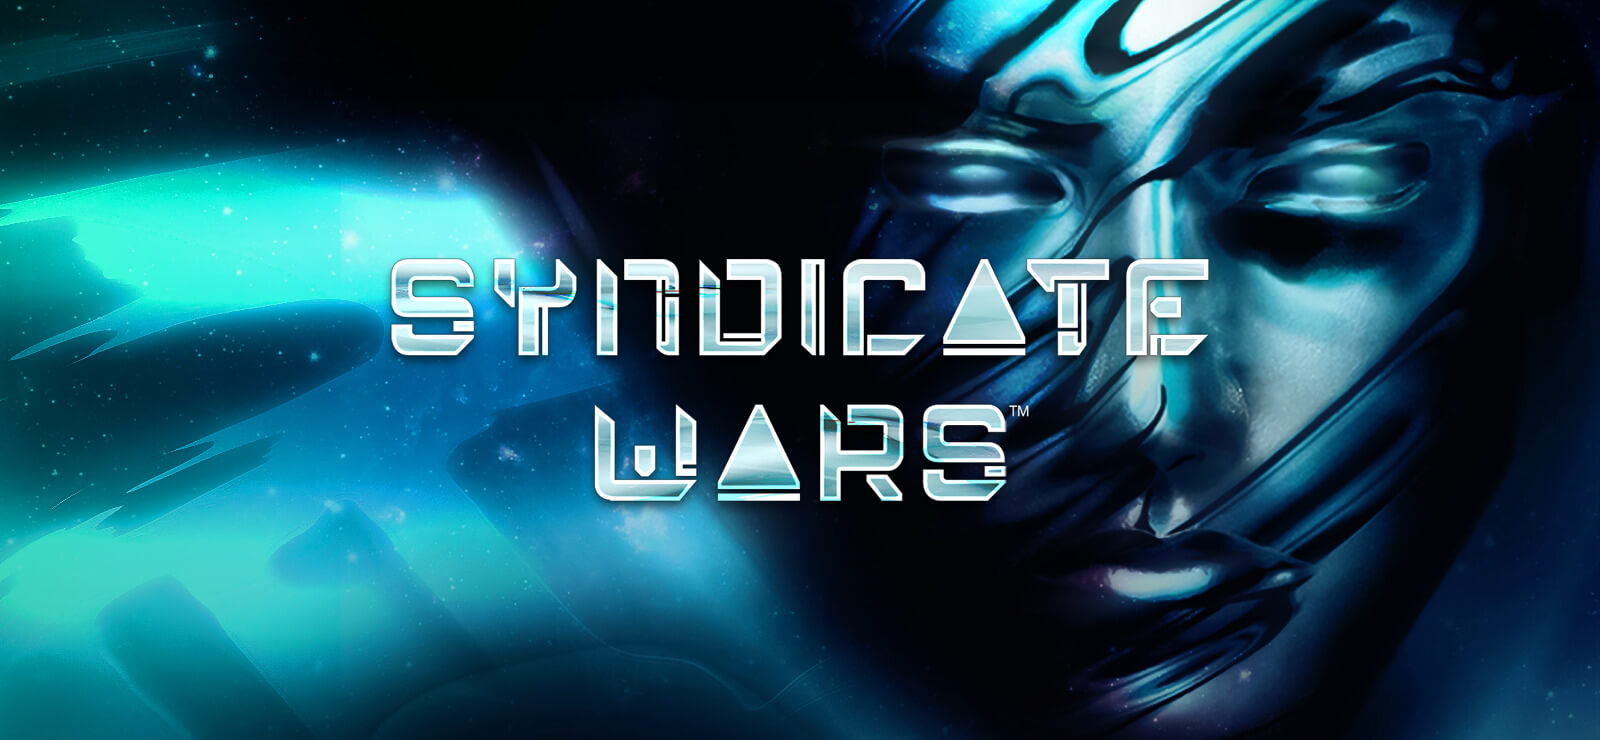 Syndicate Wars Banner Image